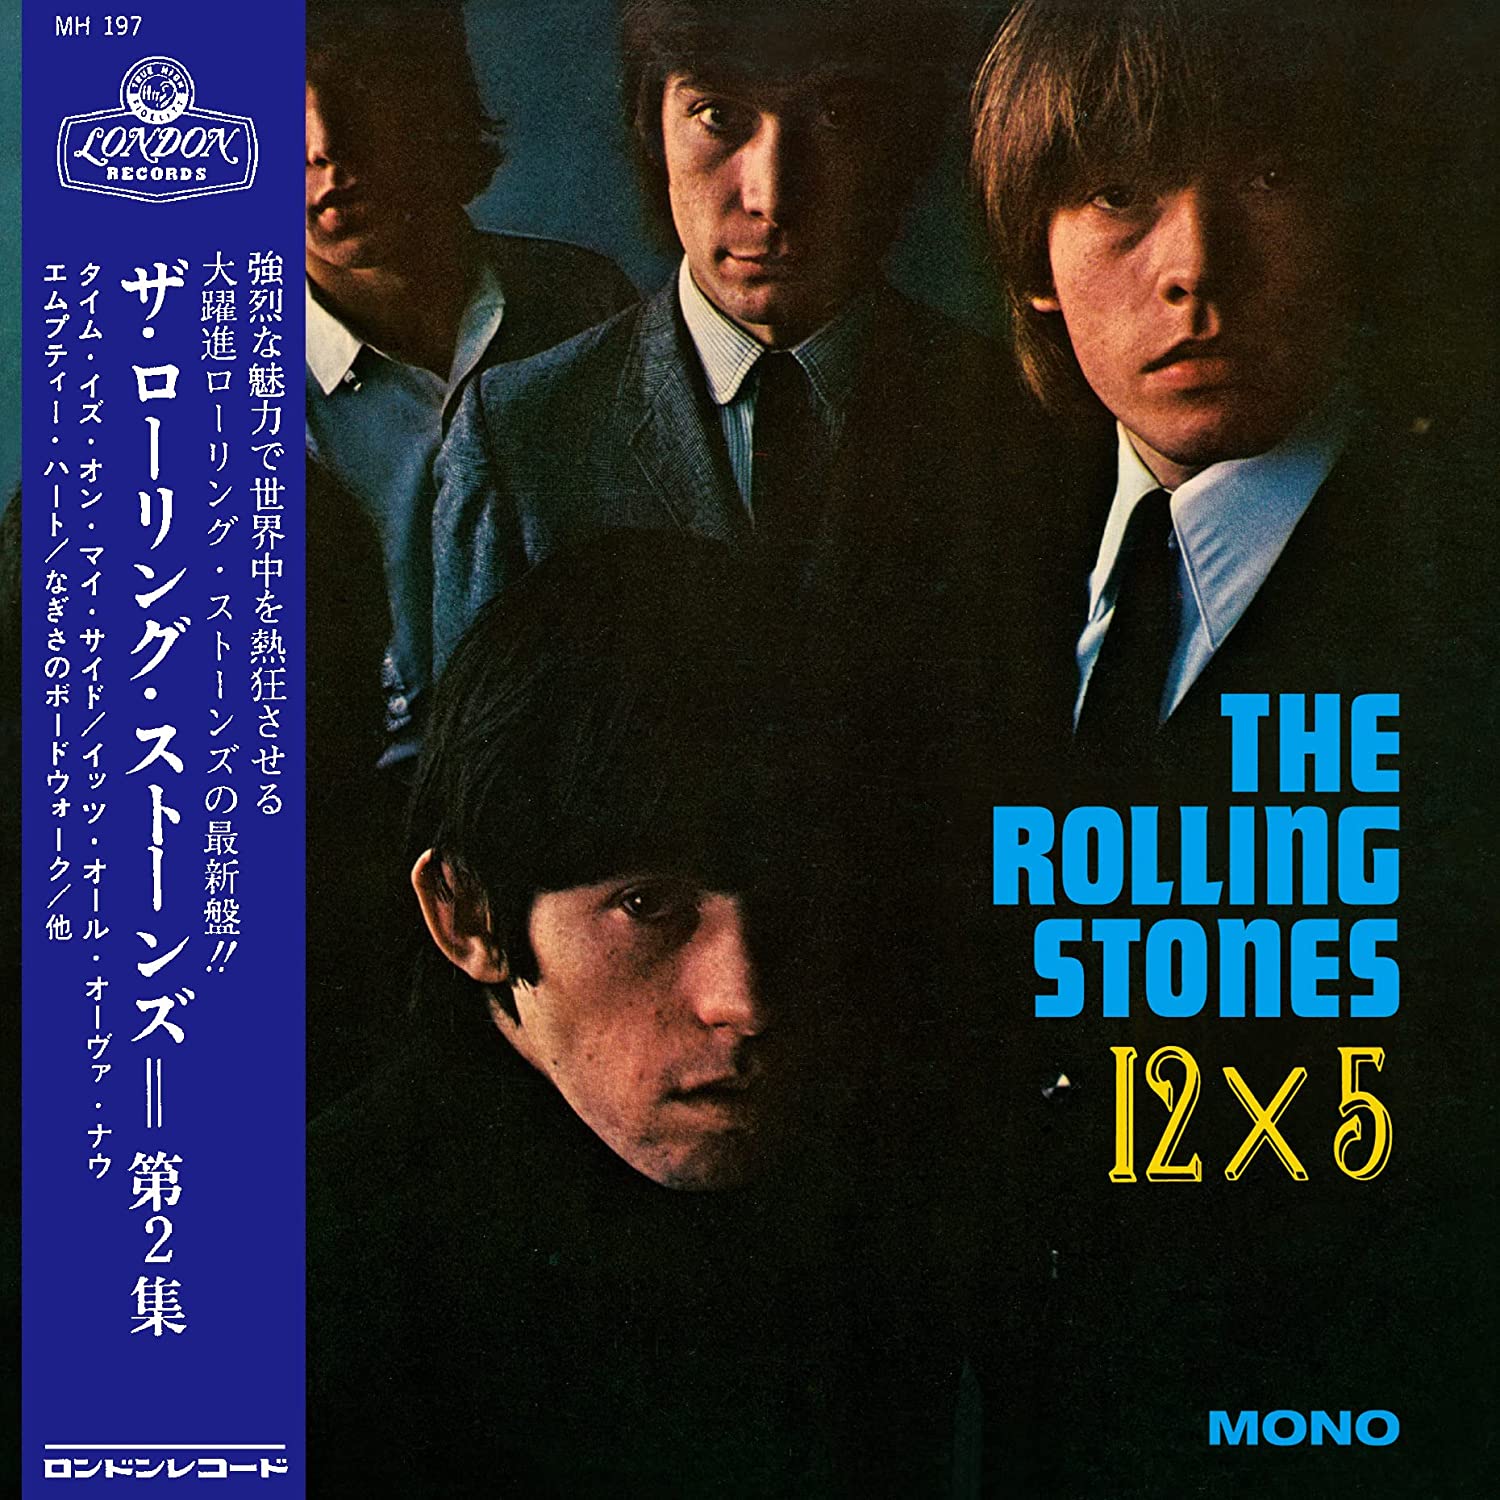 The Rolling Stones 12x5 SHM CD [Mono][Importado]